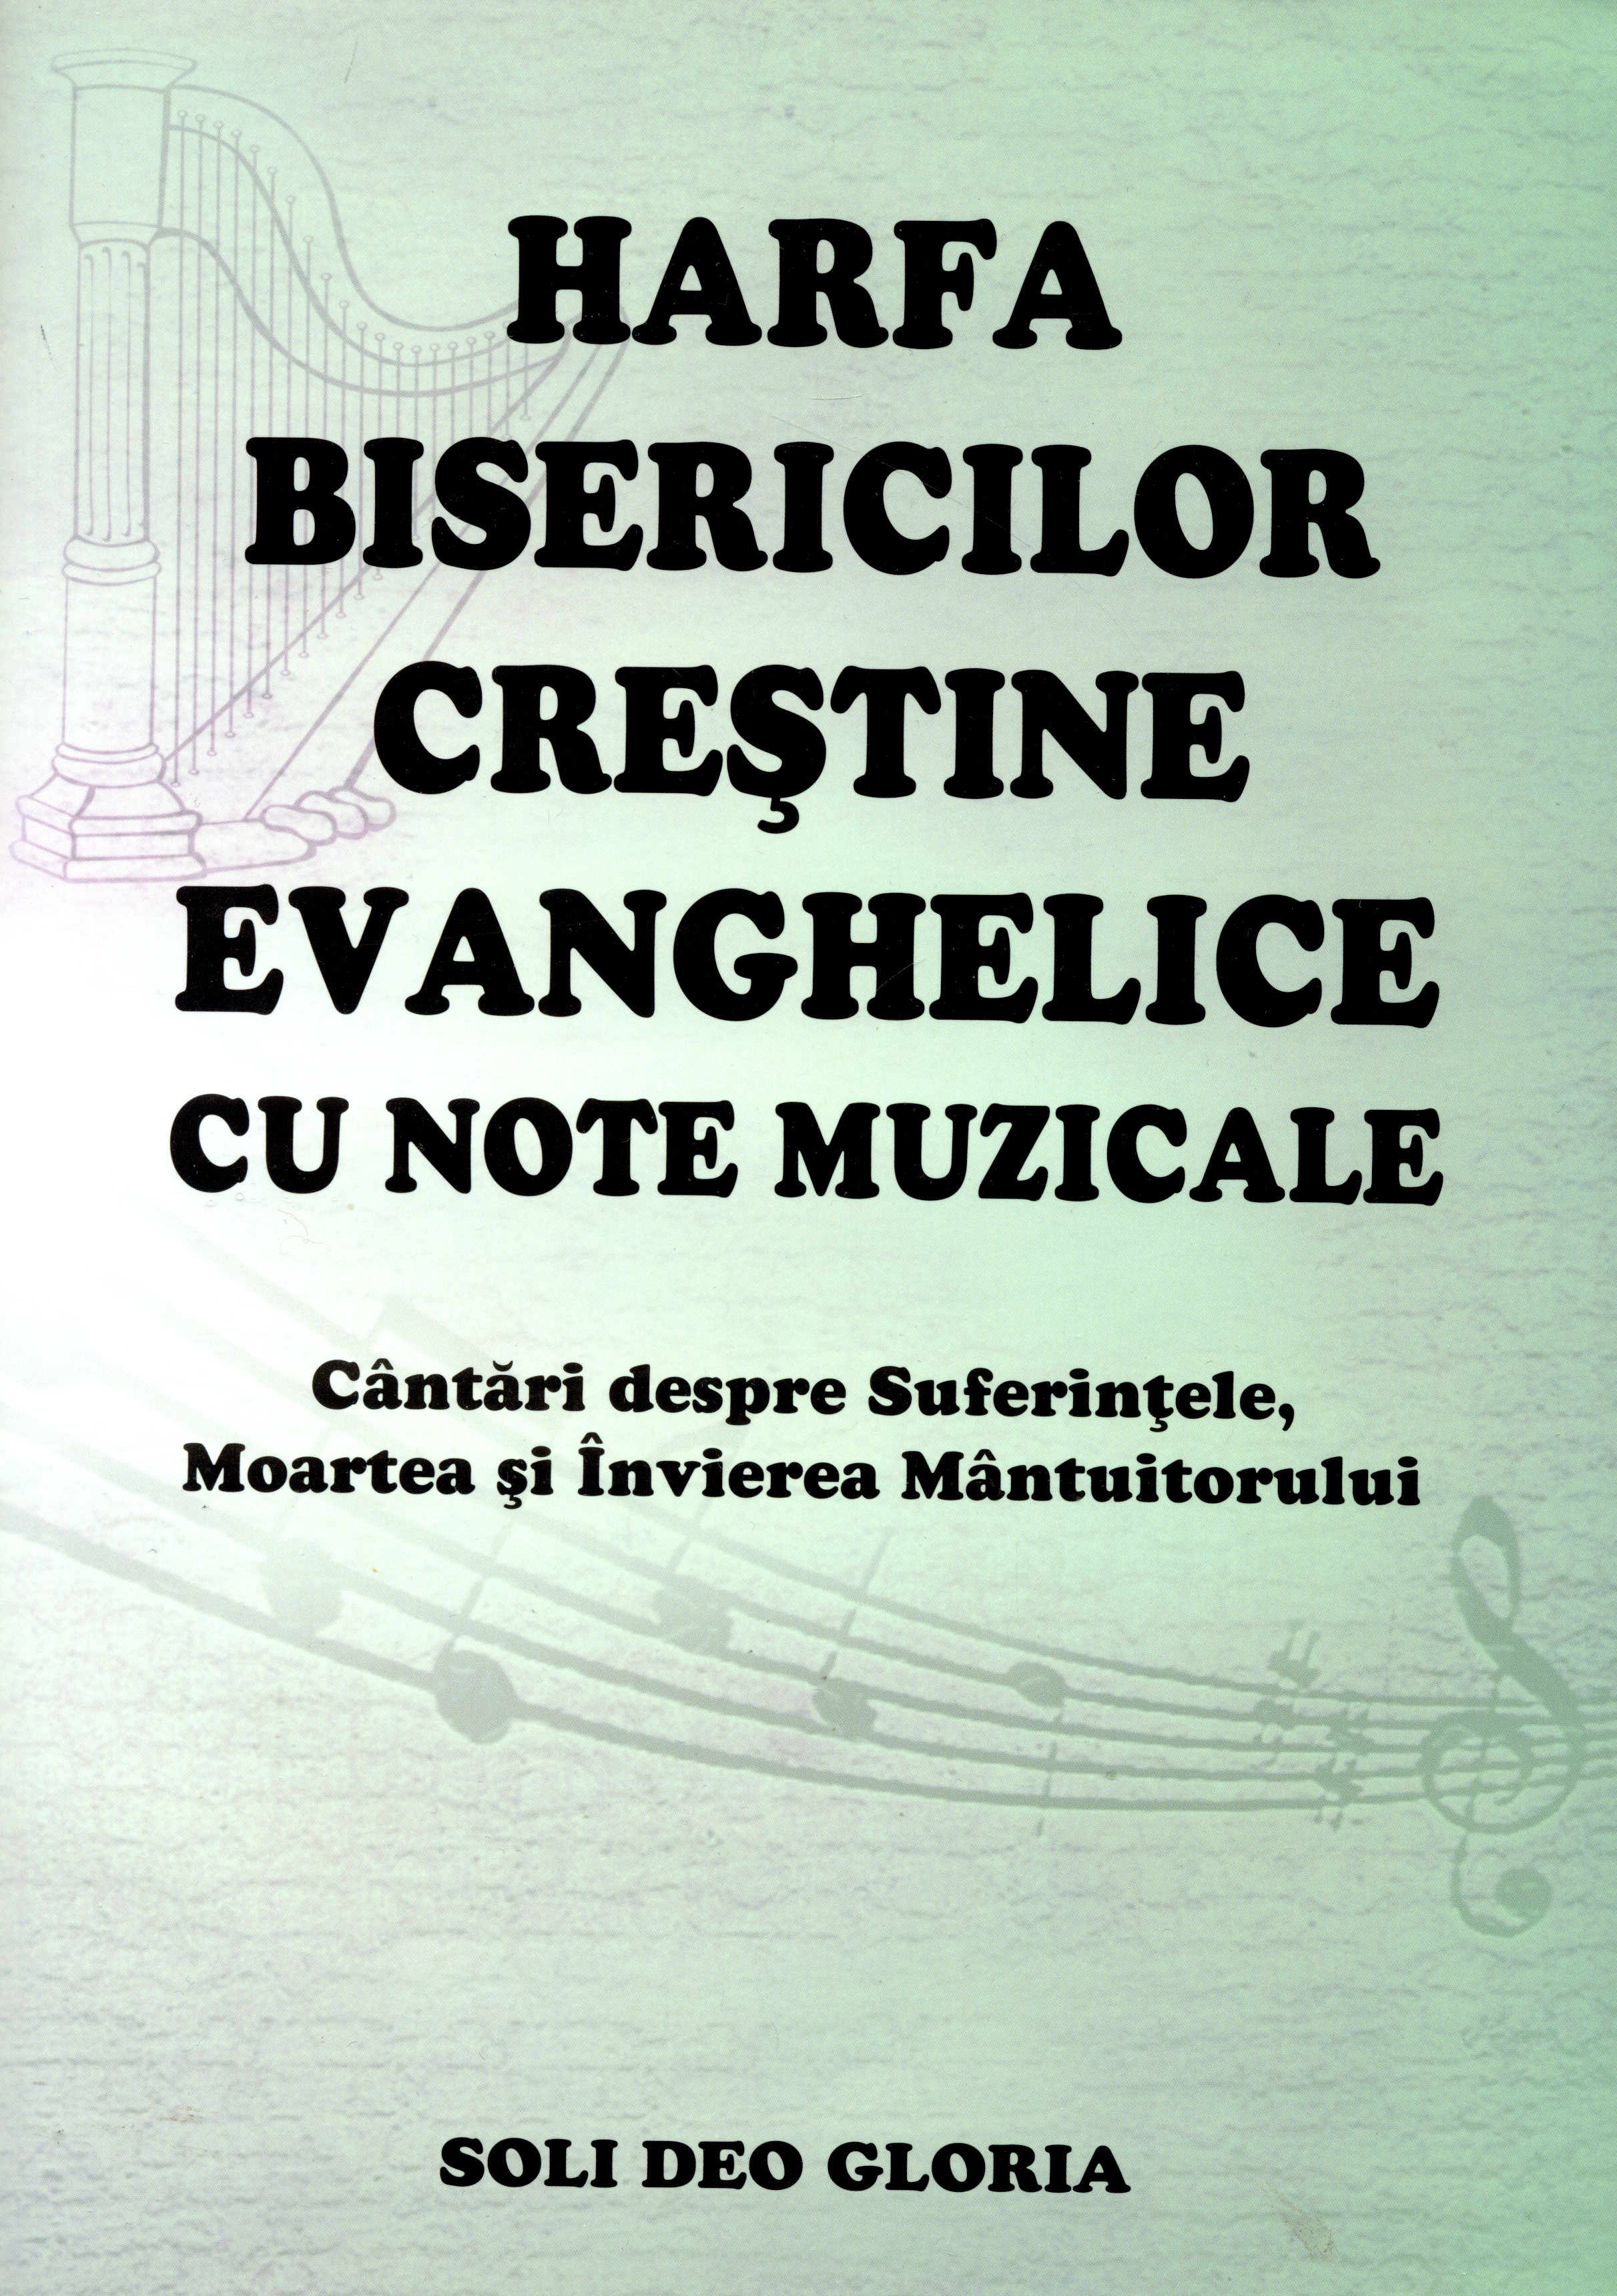 Harfa bisericilor crestine evanghelice, cu note muzicale, Pasti